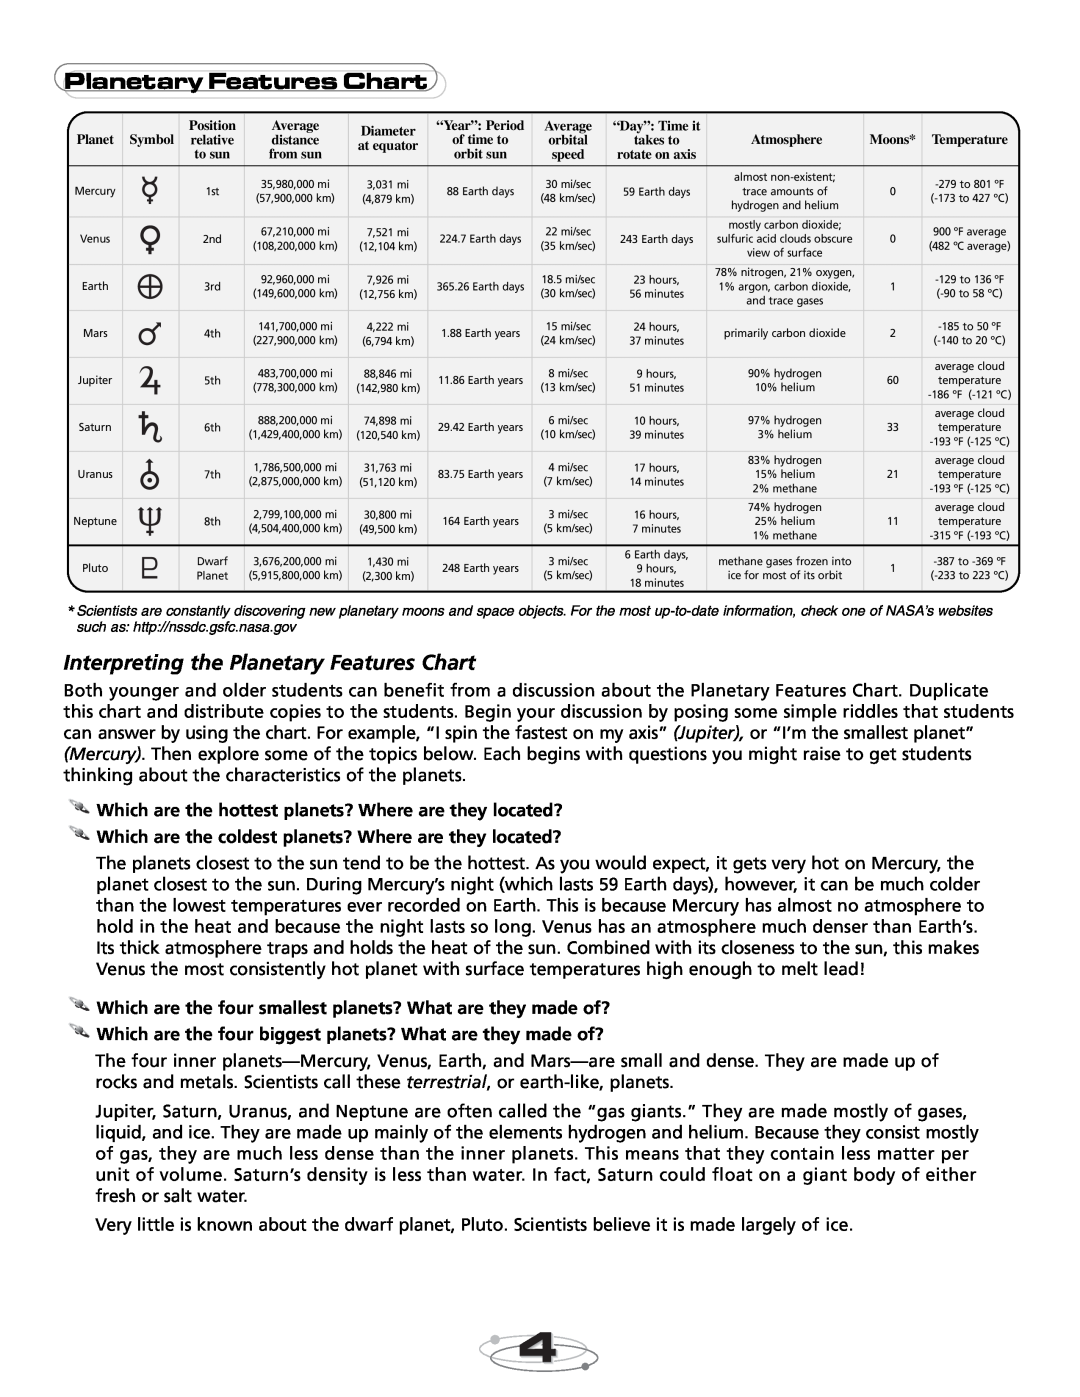 Educational Insights EI-5237 manual PlanetaryFeaturesChart, Interpreting the Planetary Features Chart 